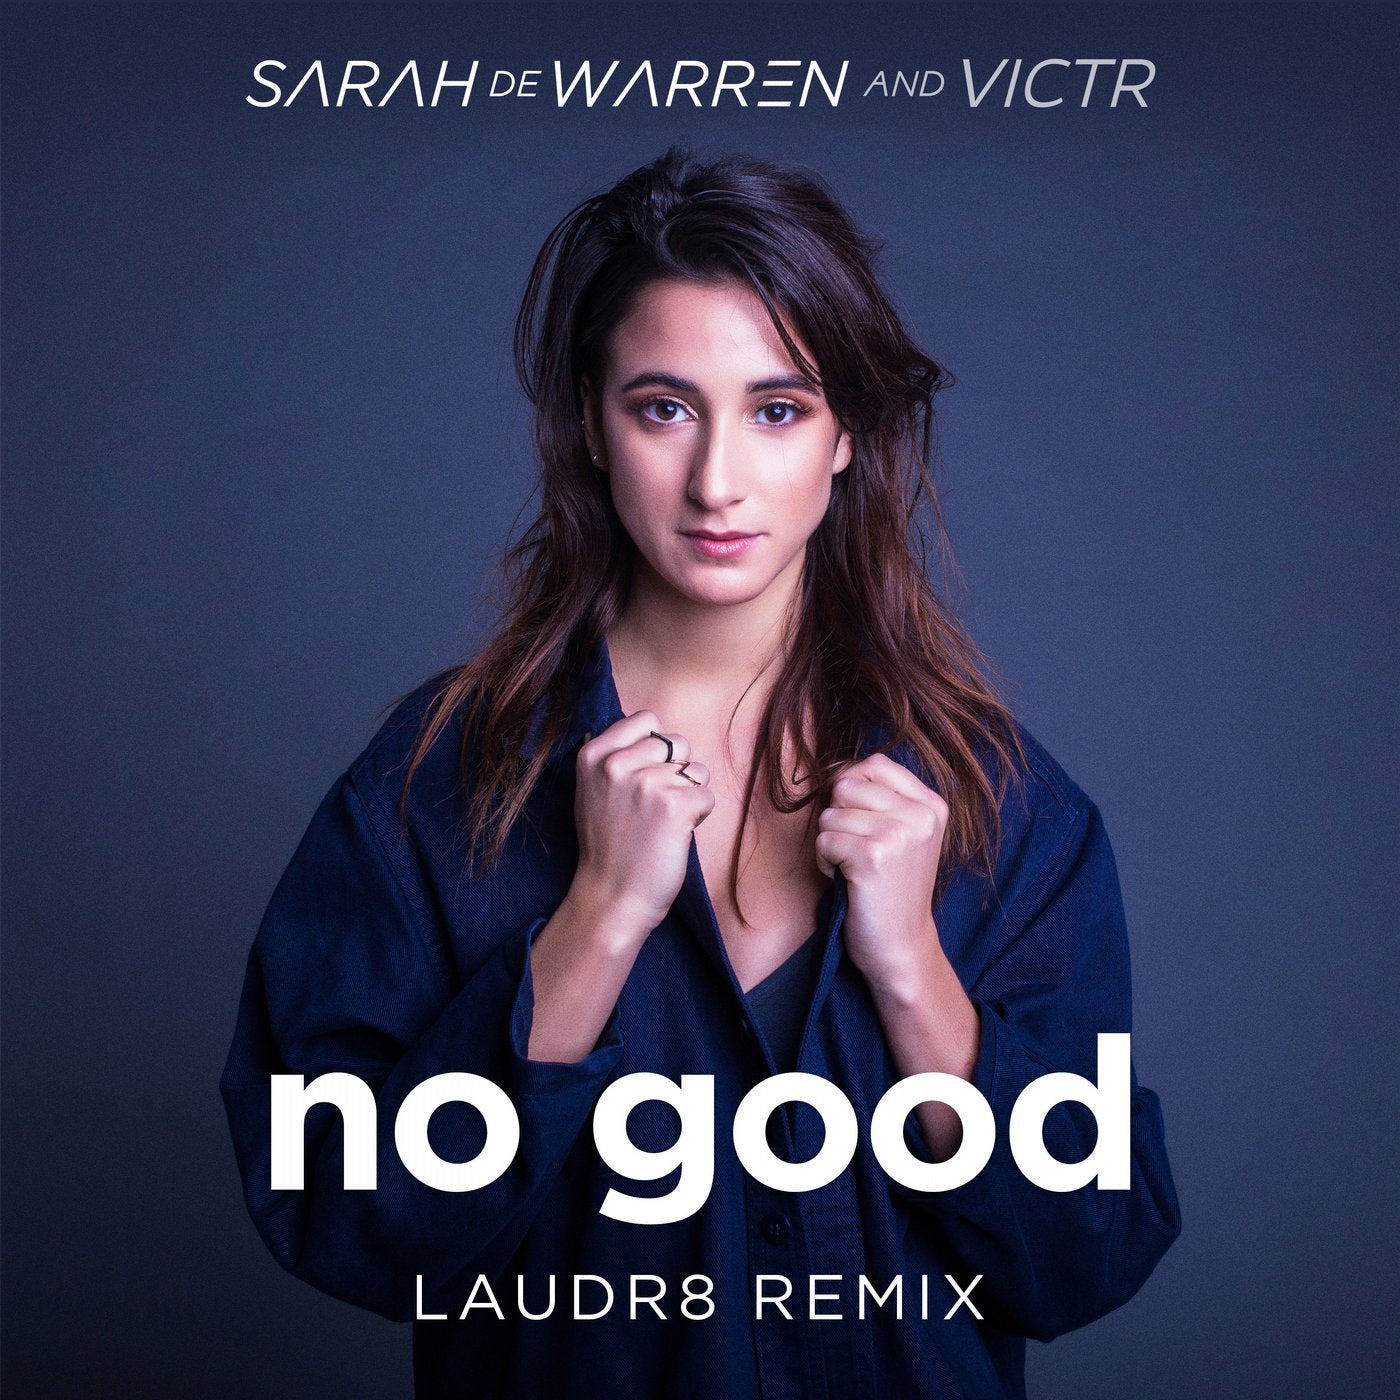 No Good (Laudr8 Remix)